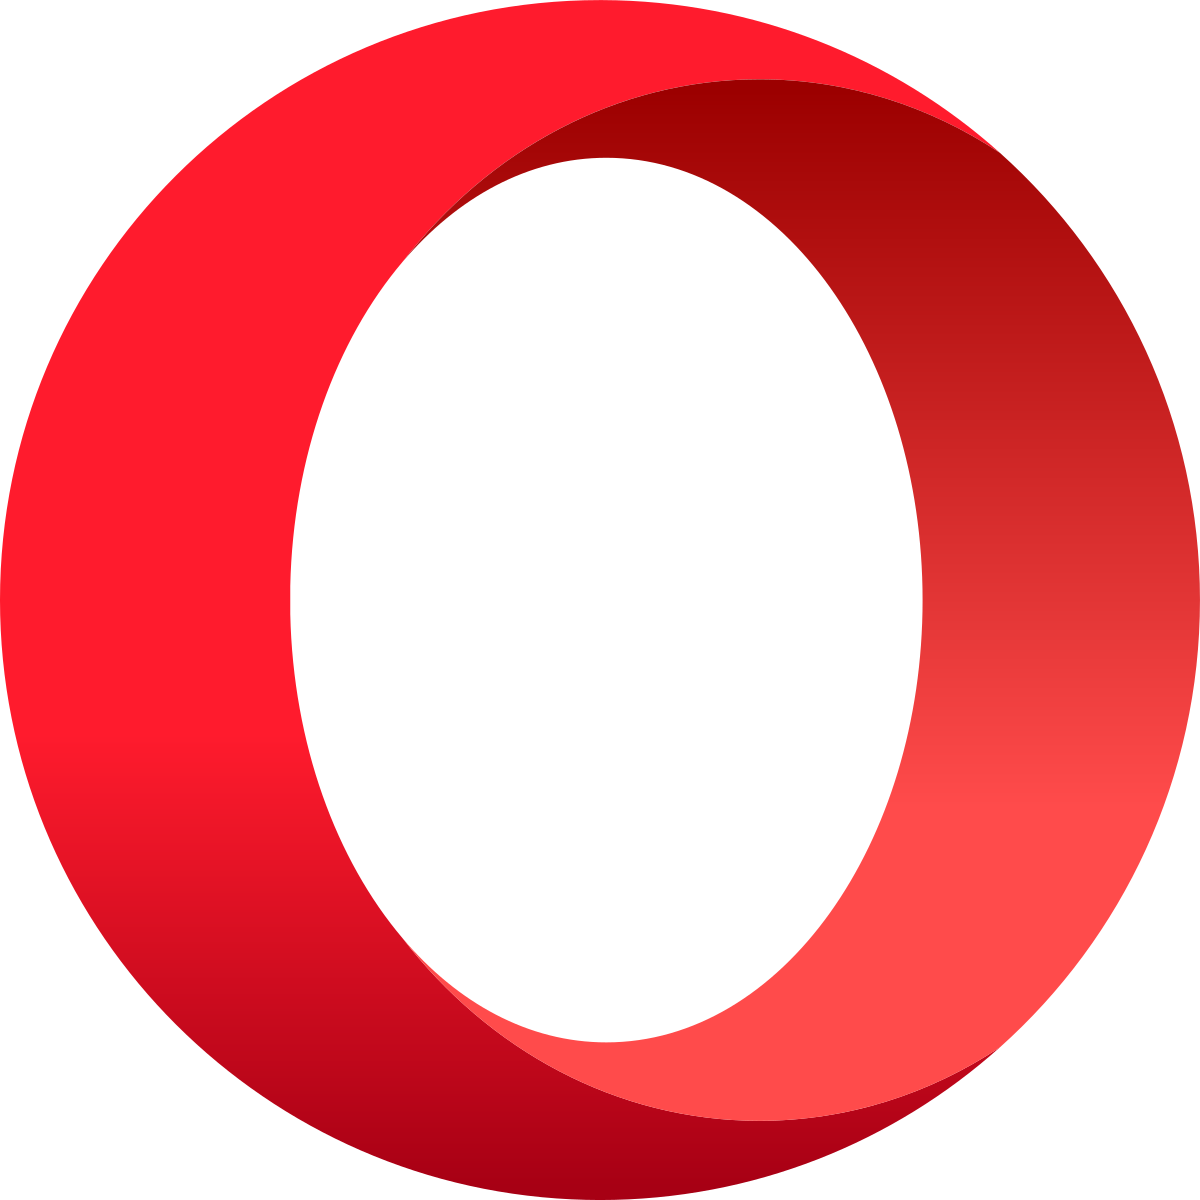 opera mini browser for mac os x